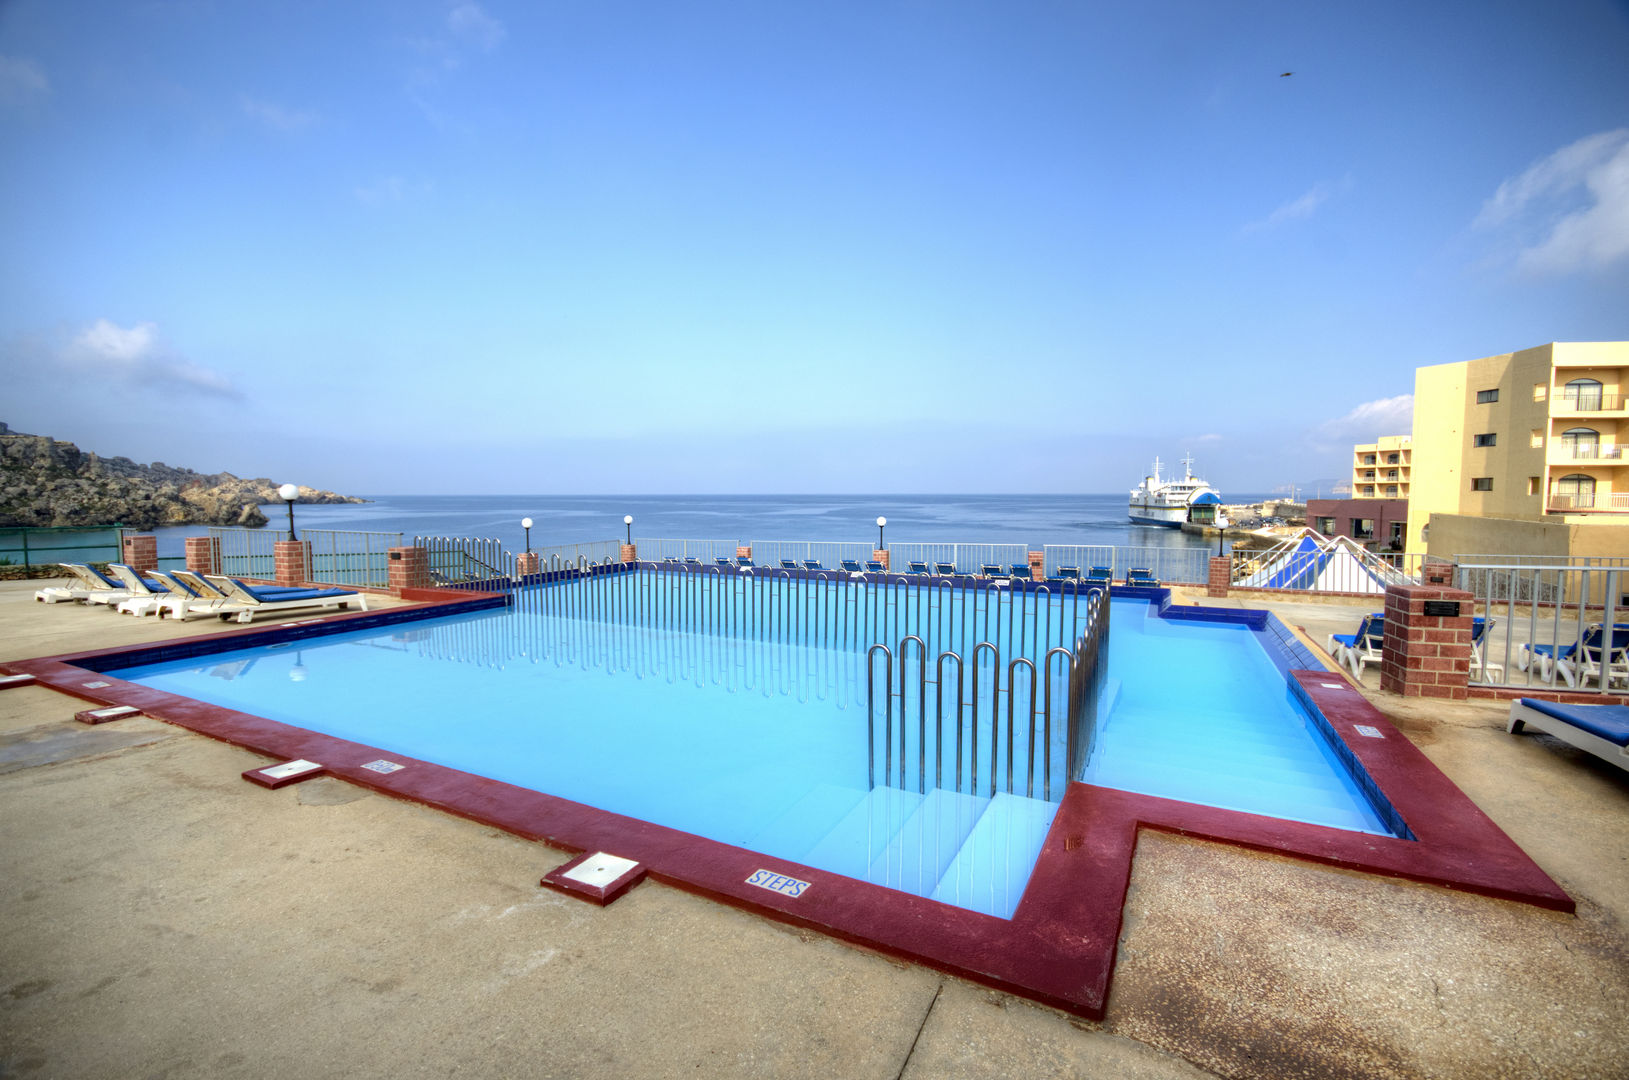 Hotel Paradise Bay Resort